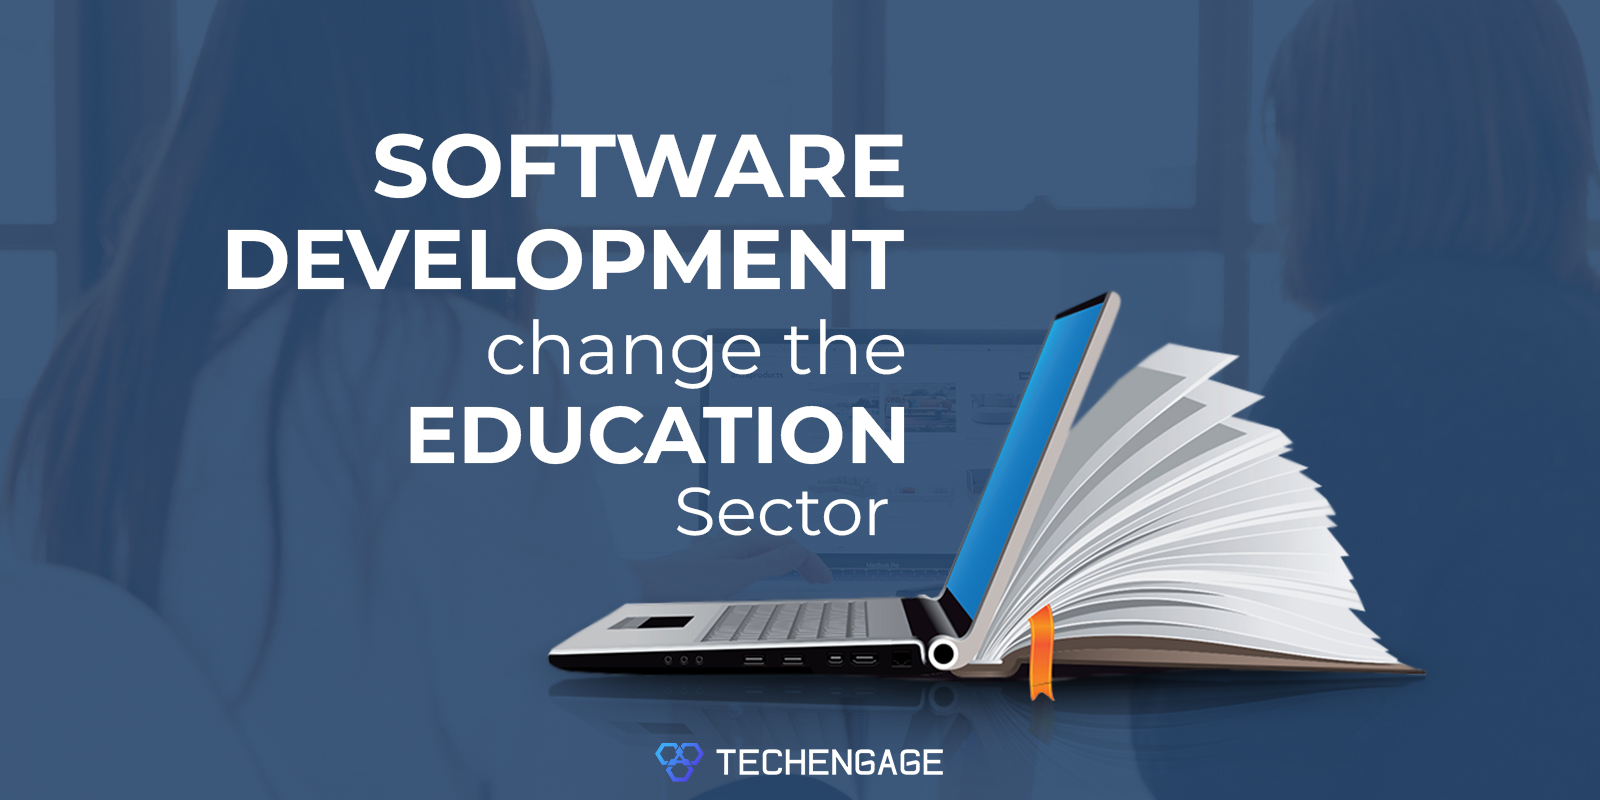 Software Development change the Education